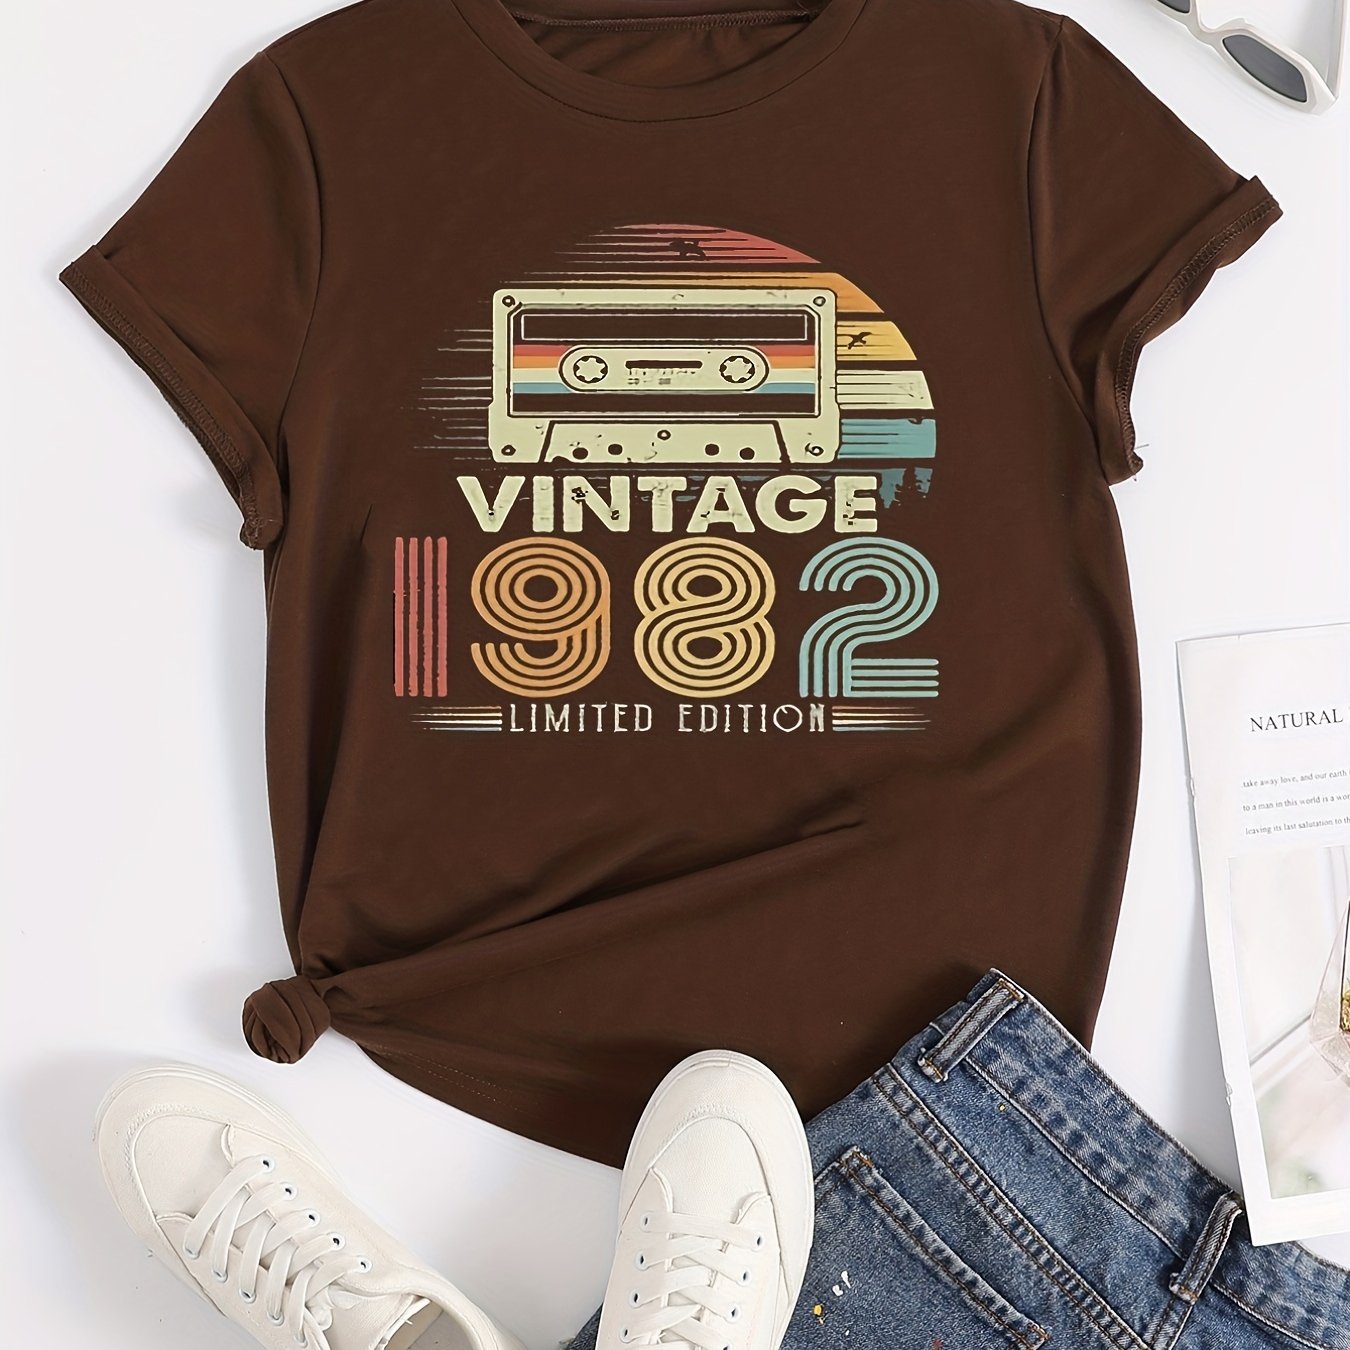 Vintage 1982 Letter Print T-shirt, Casual Crew Neck Short Sleeve T-shirt, Women's Clothing